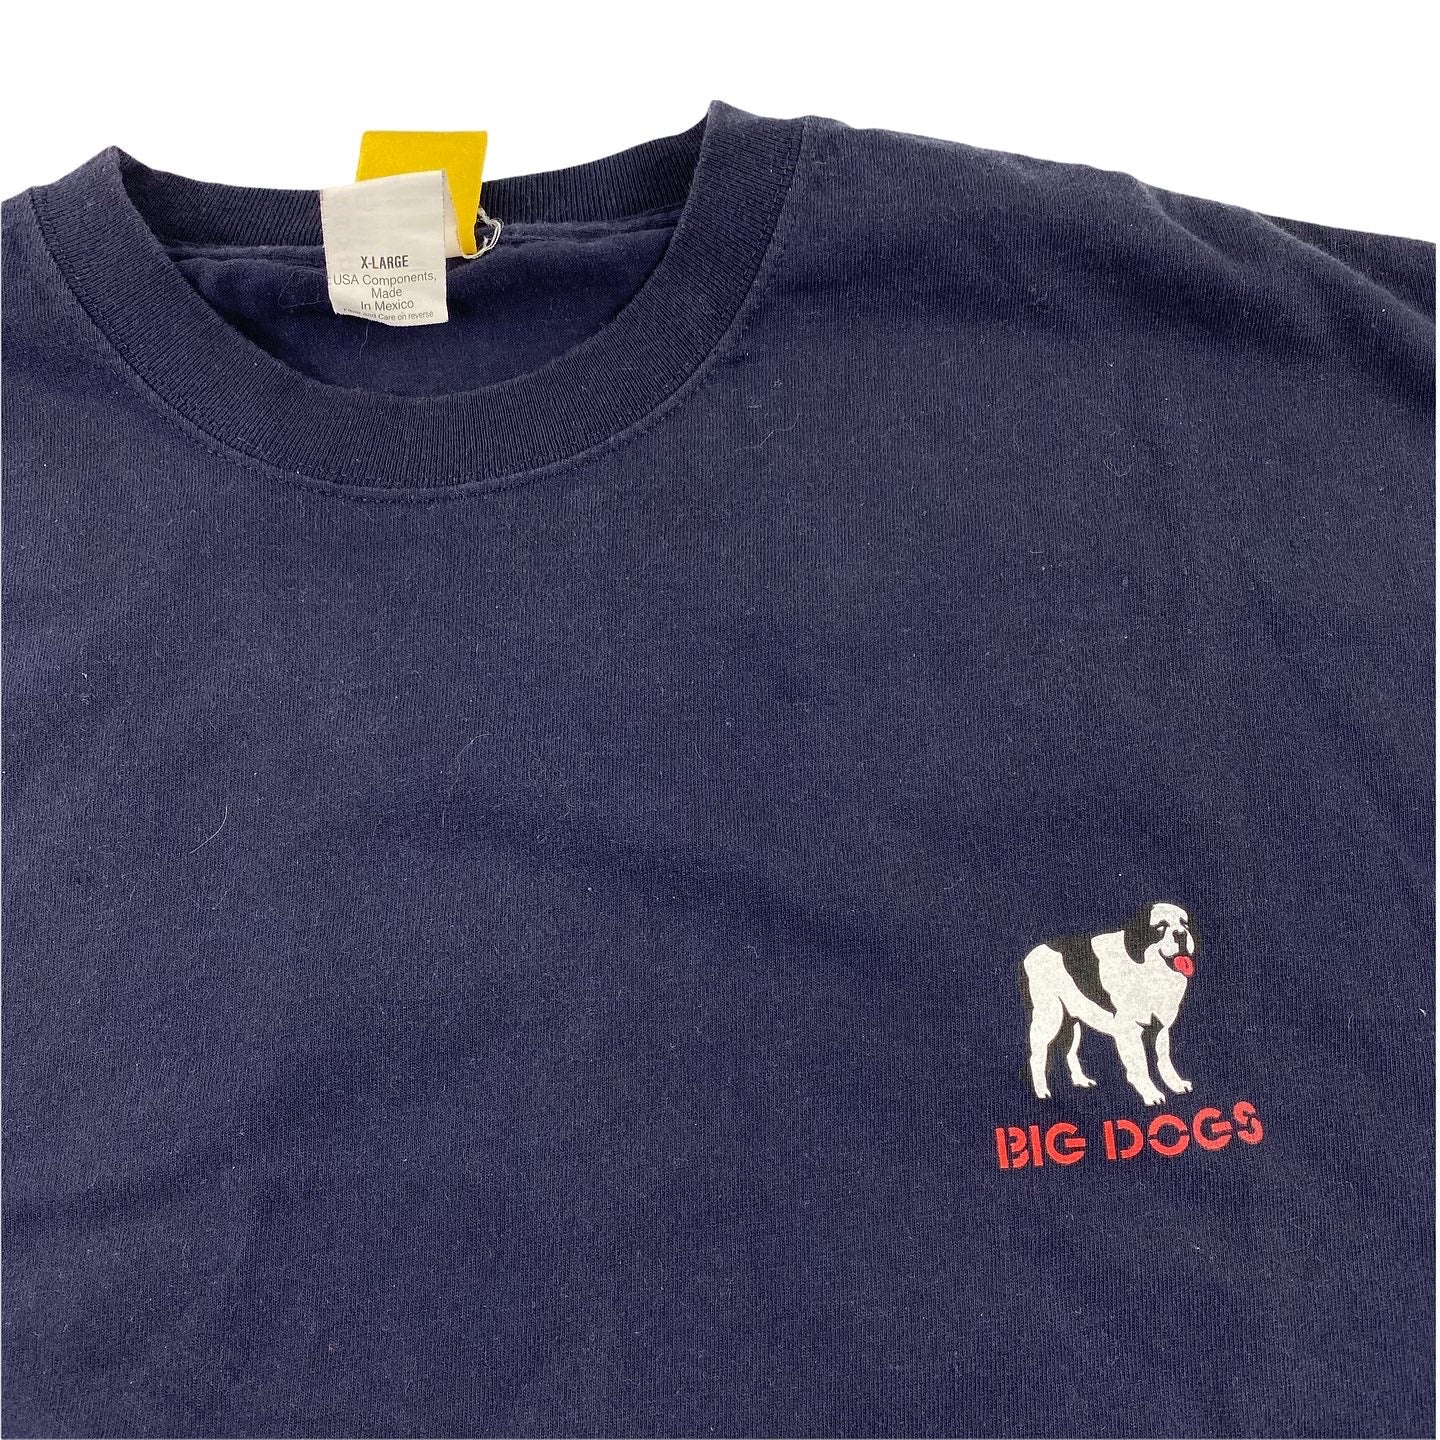 Big Dogs “who freakin cares” tee XL